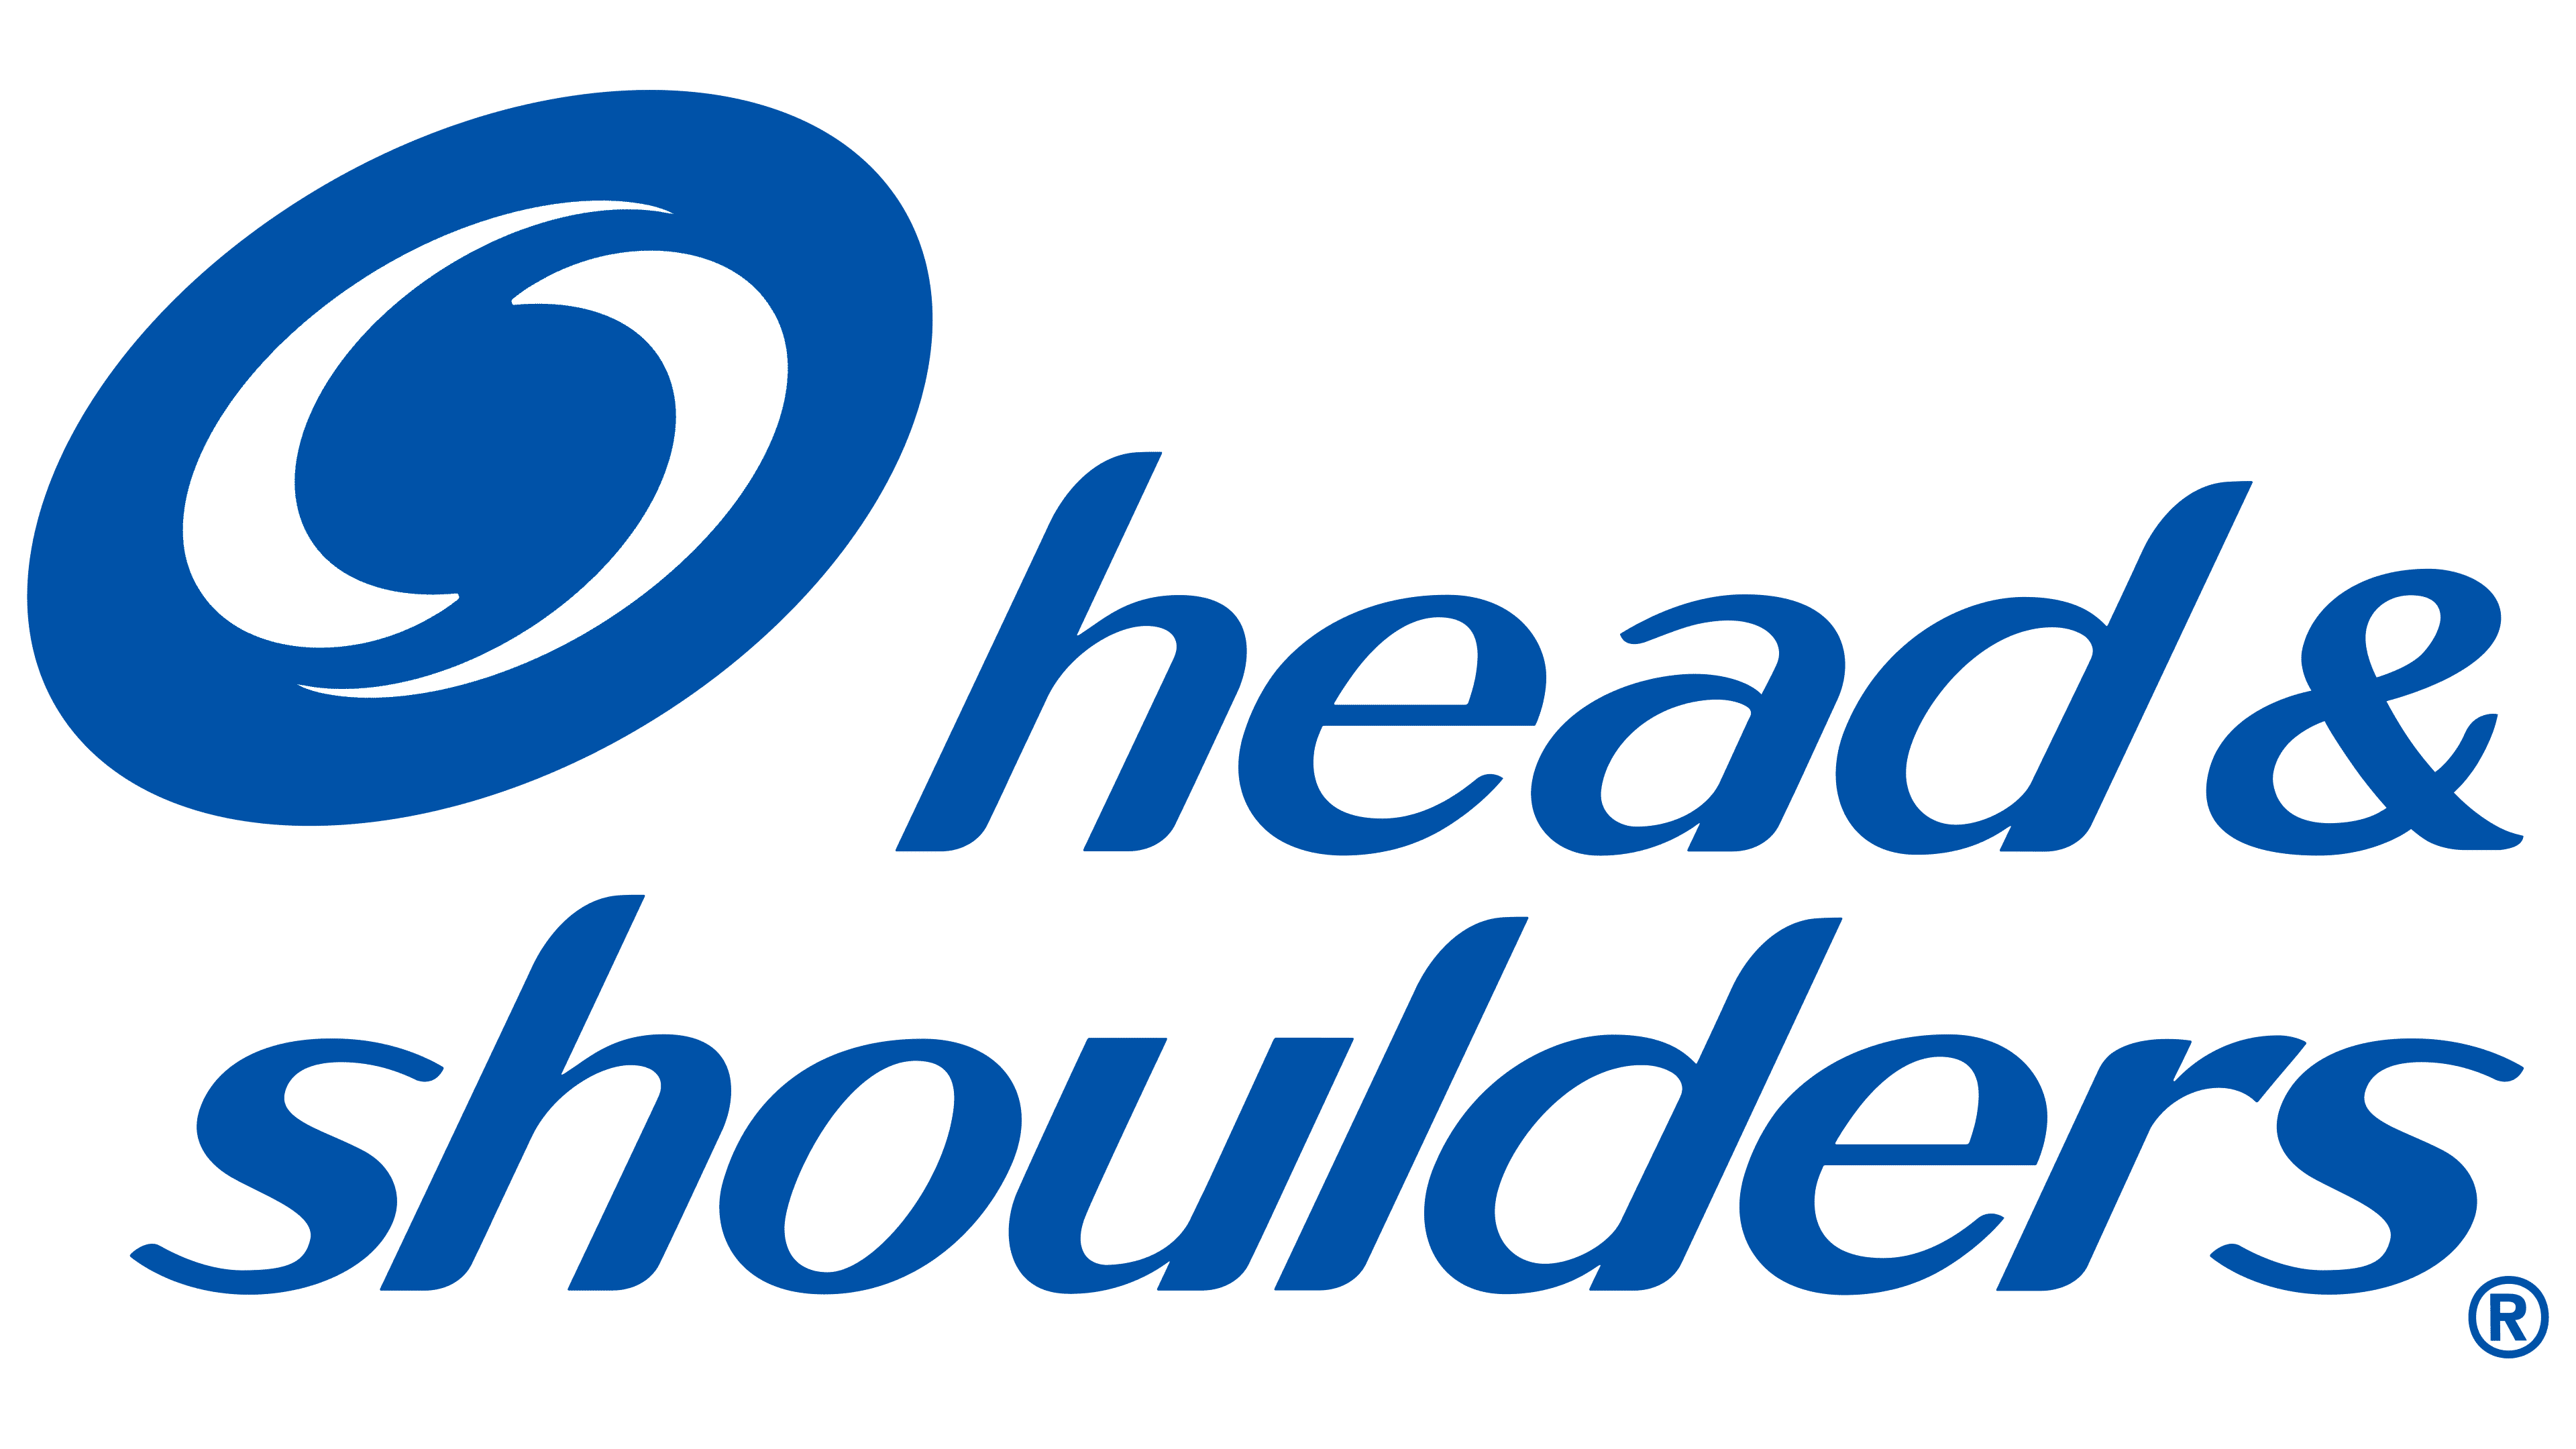 head-shoulders